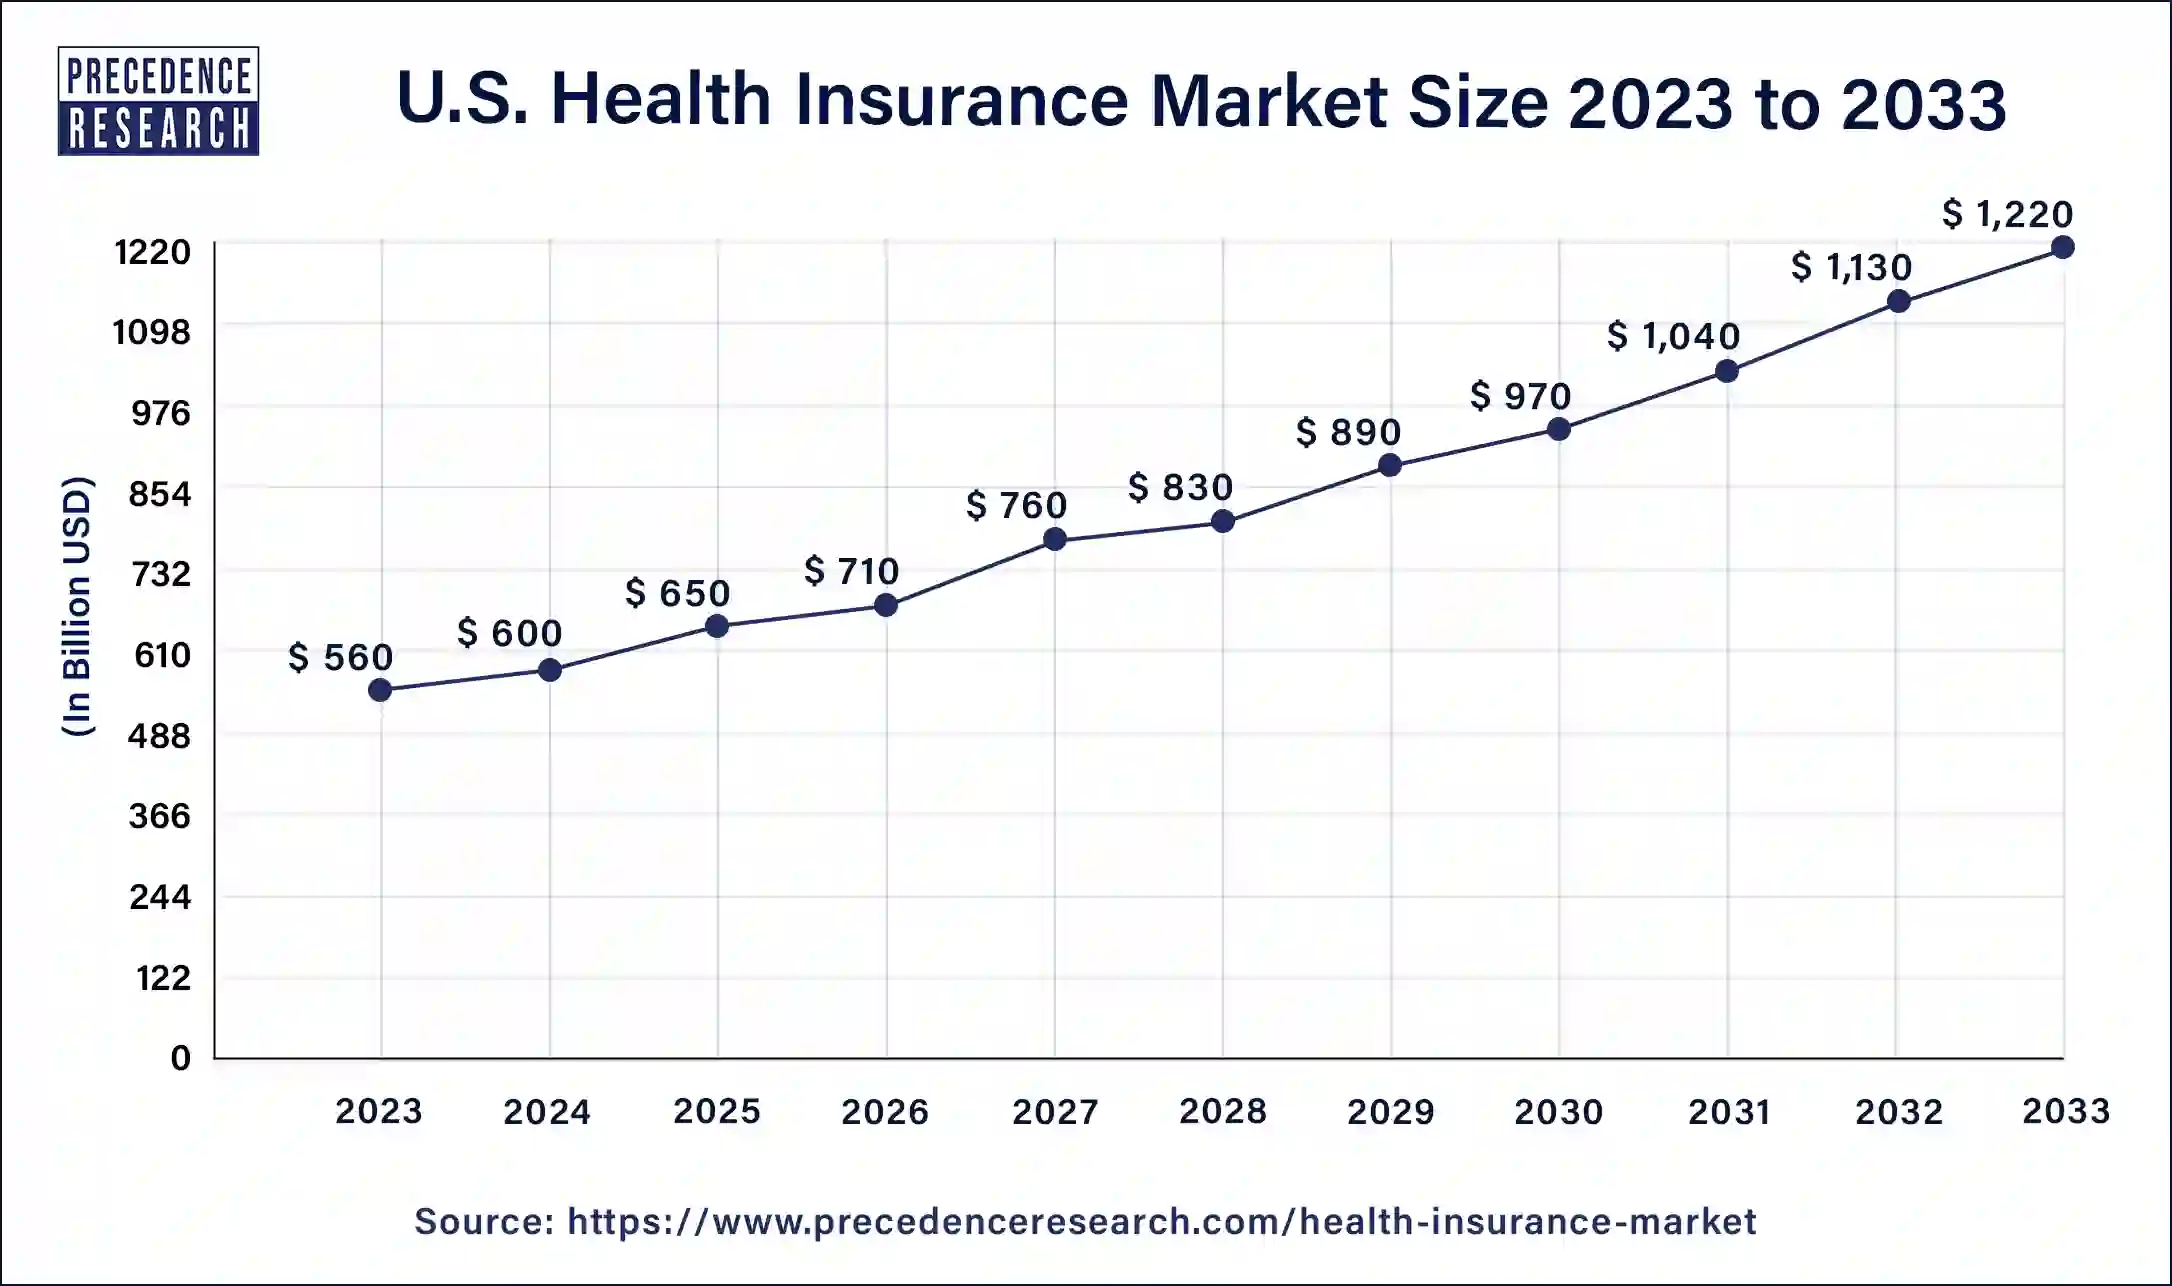 U.S. Health Insurance Market Size 2024 to 2033